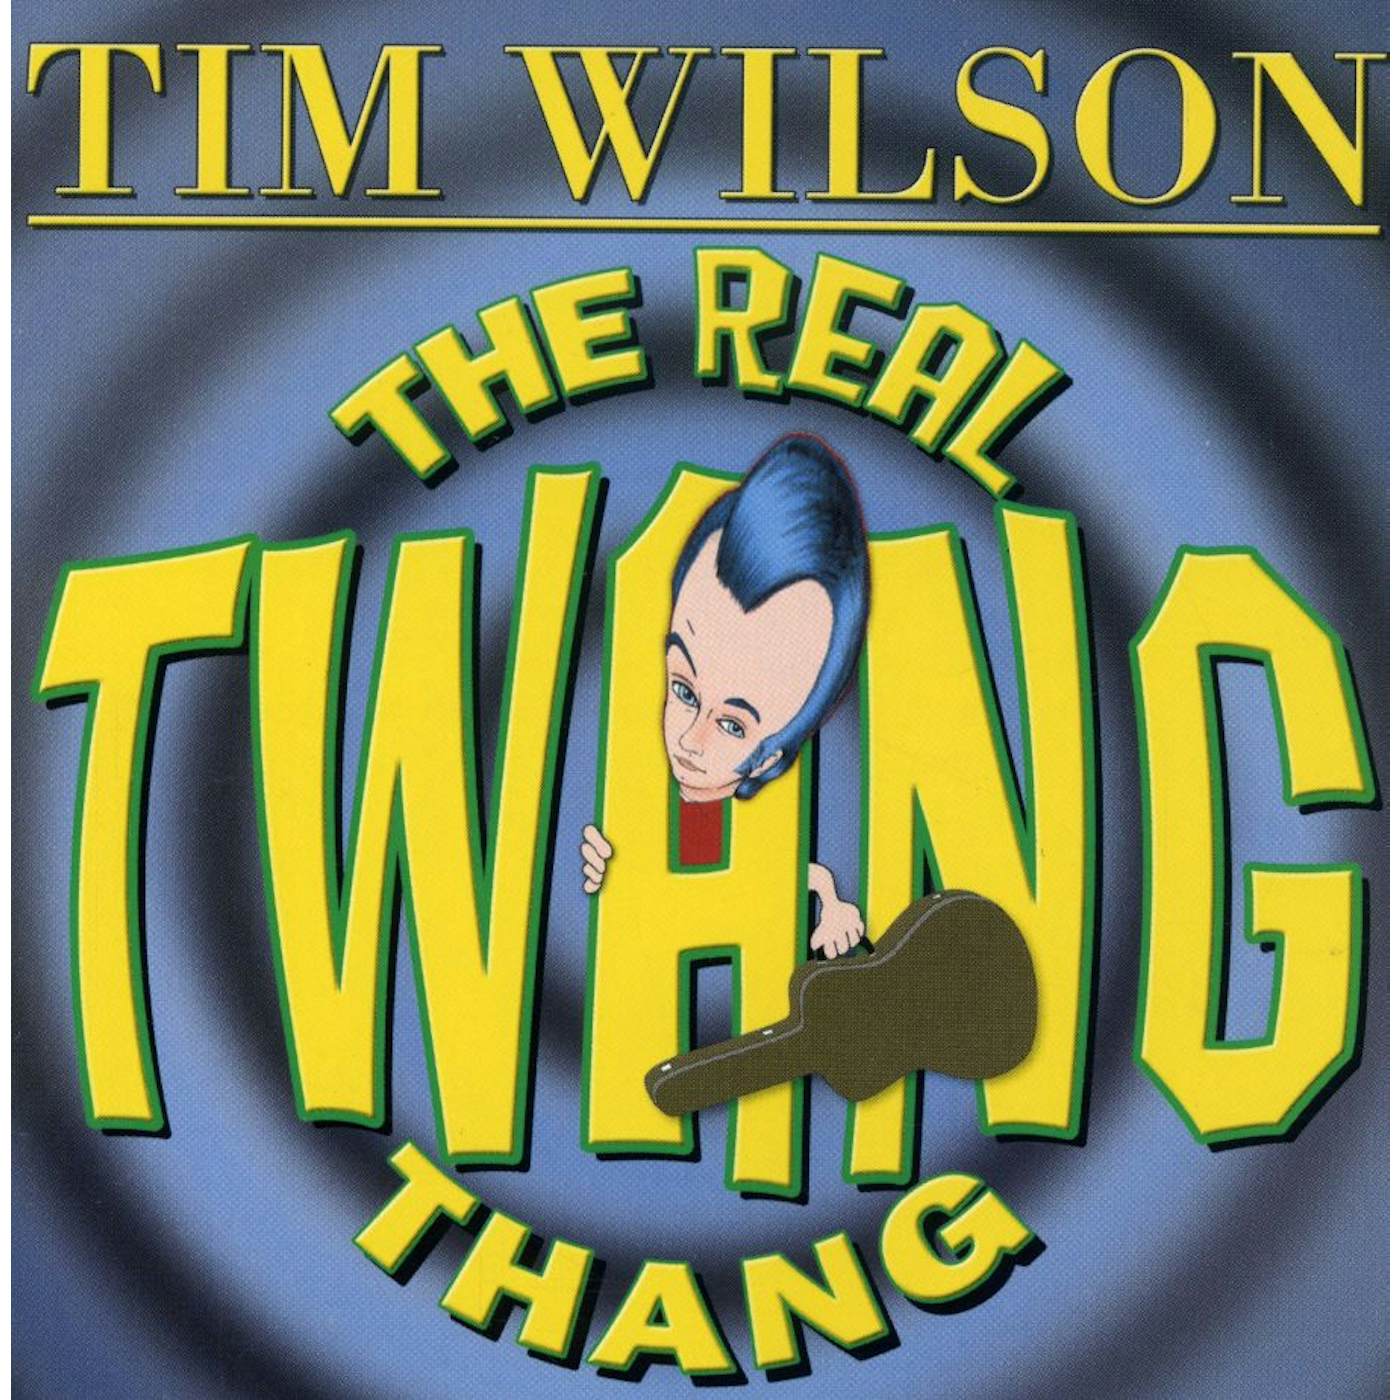 Tim Wilson REAL TWANG THANG CD